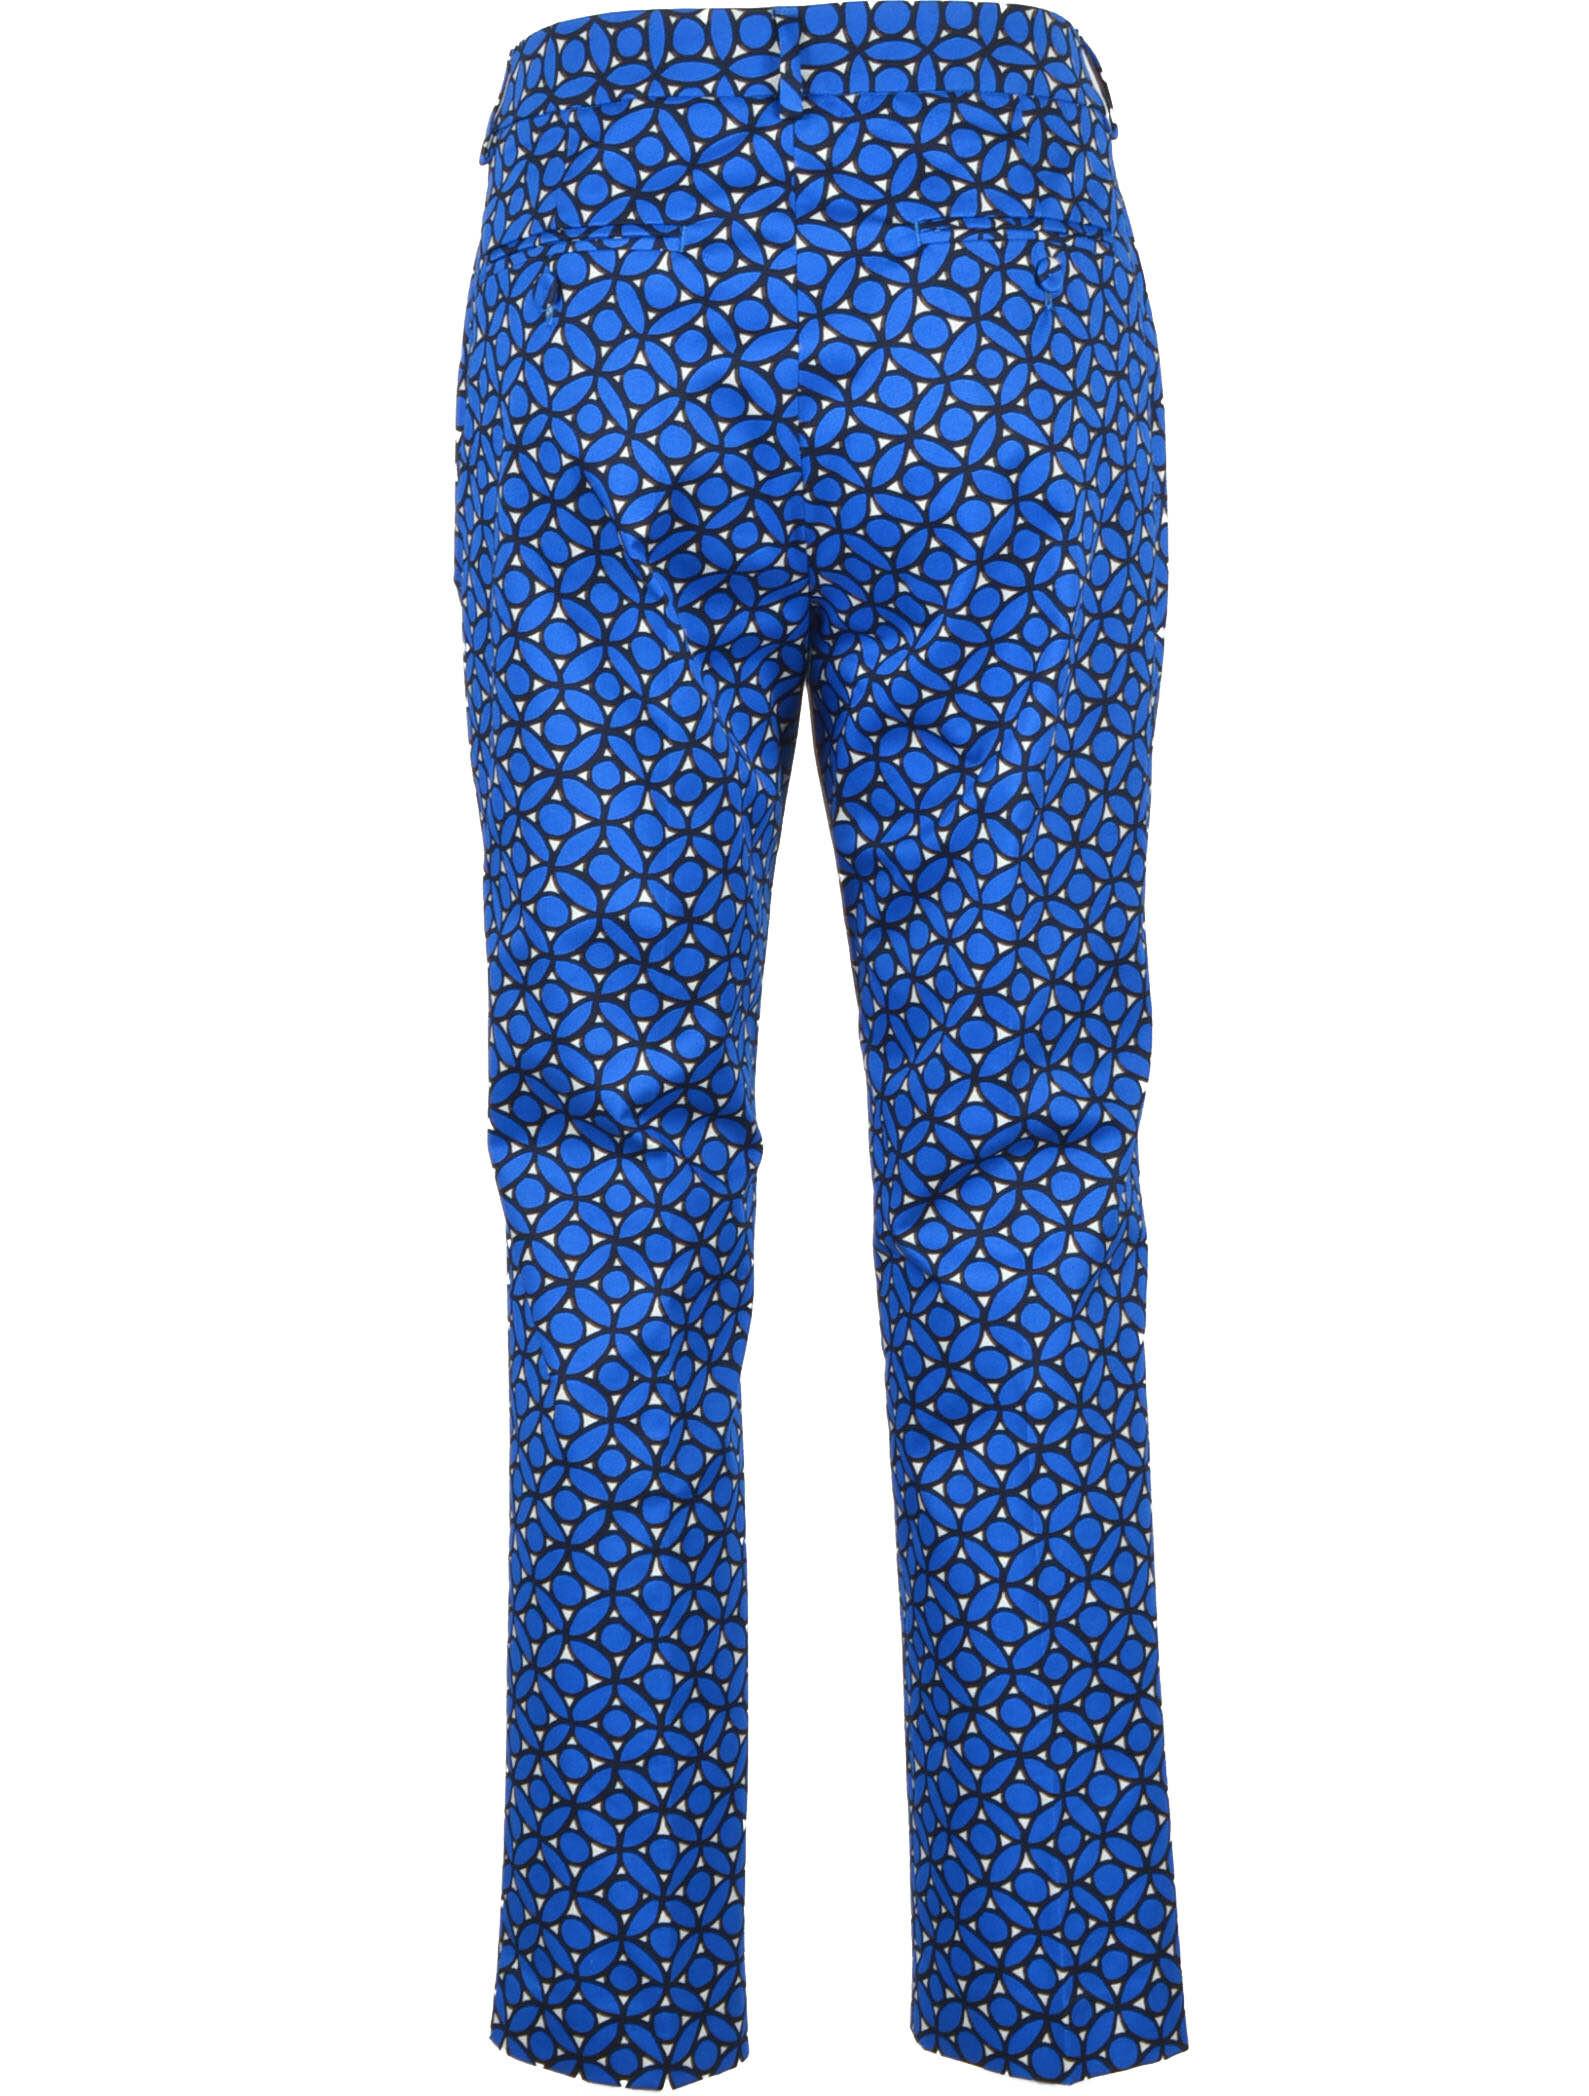  Women's Blue Pants